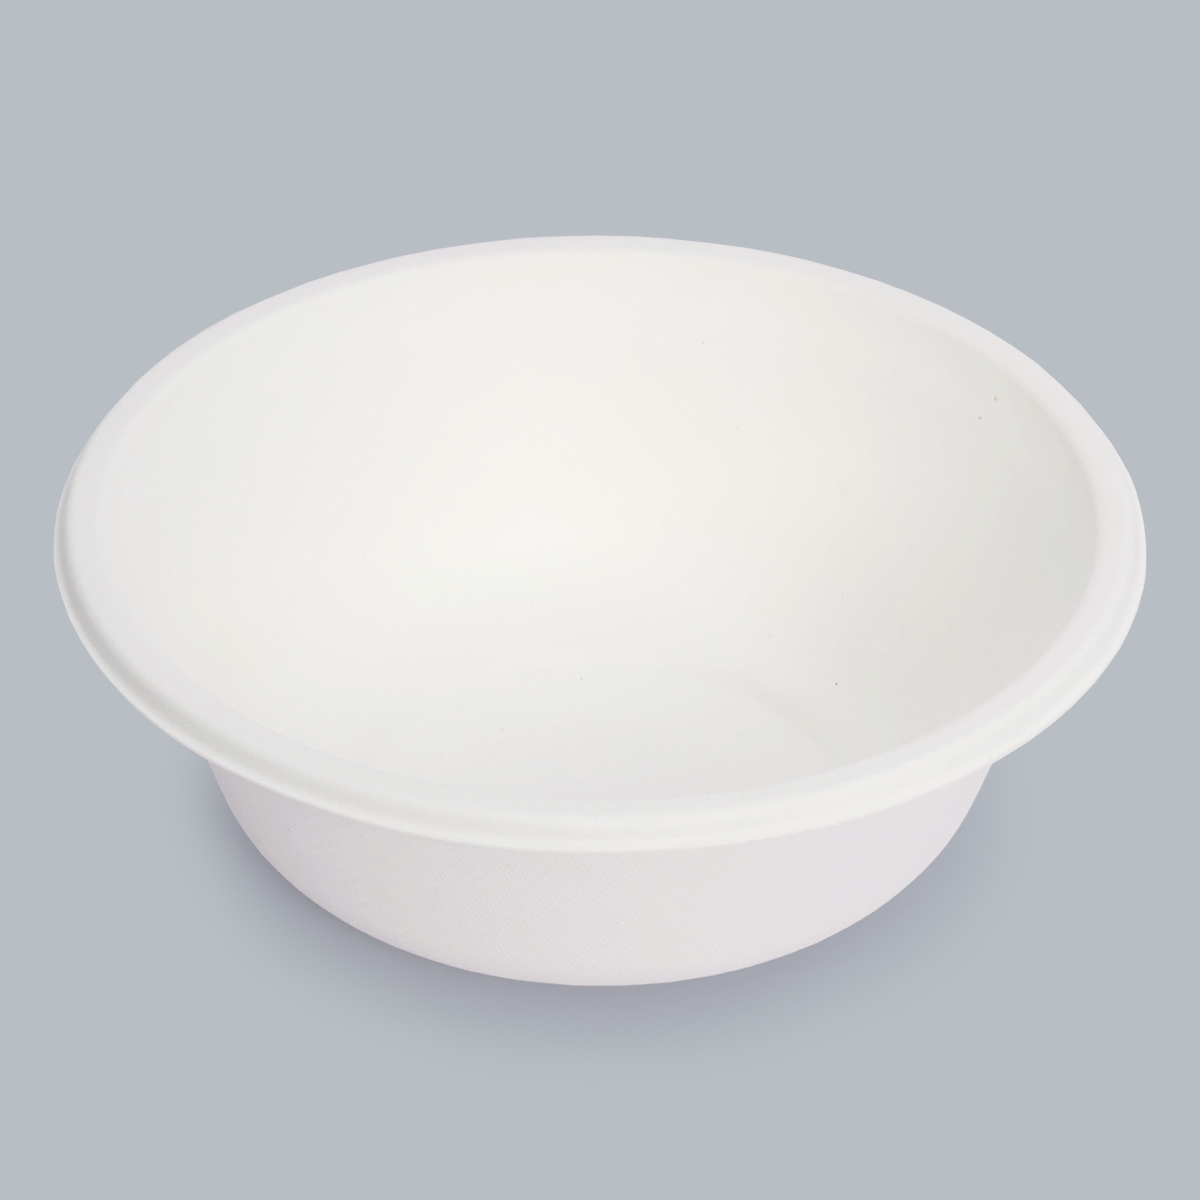 Multifunctional bowls environmentally friendly tableware Eco-friendly bowls